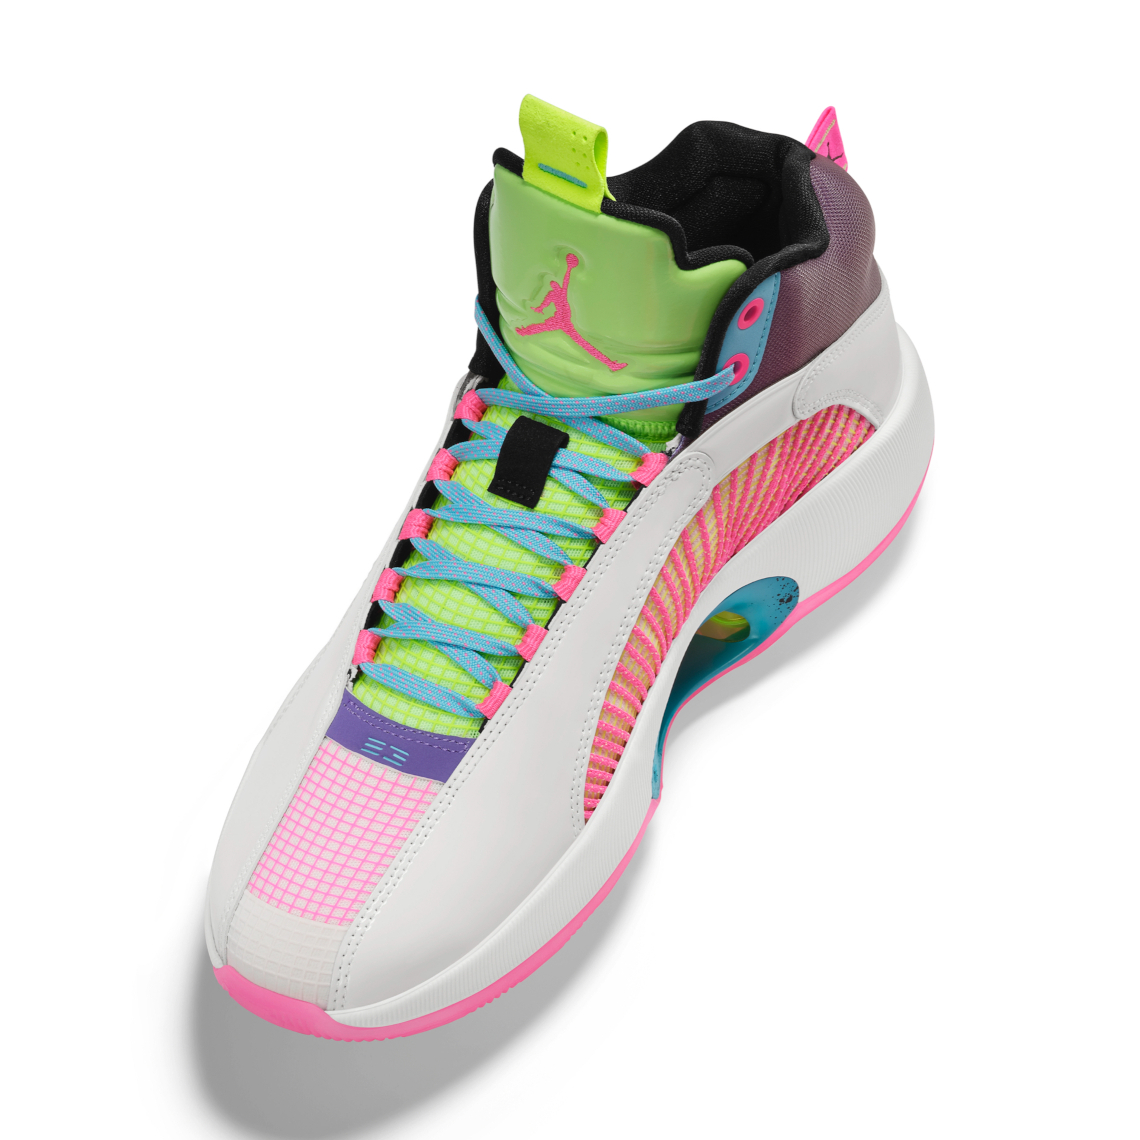 B/R Kicks - Jayson Tatum wearing the Air Jordan 35 “Pink Lemonde” PE  tonight in Miami 🍋 NBA sneakers at Instagram.com/brkicks